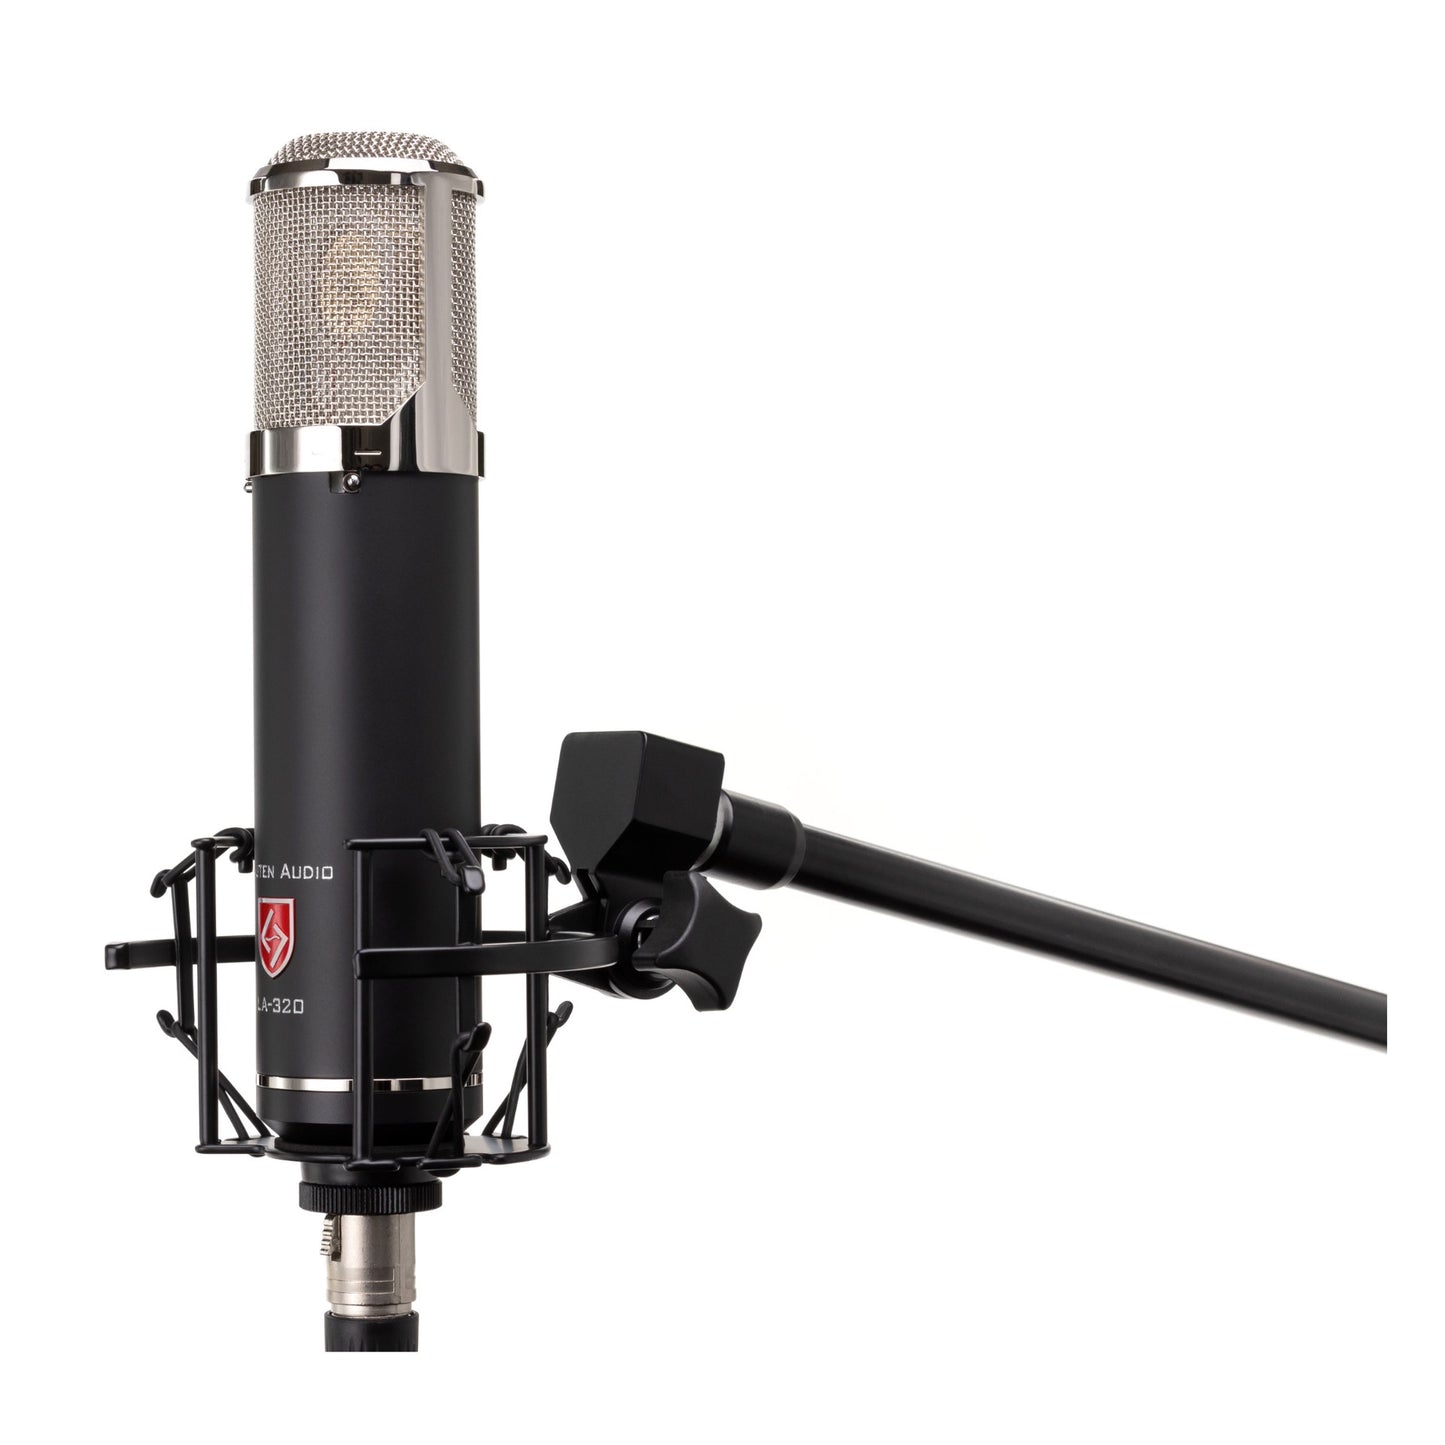 Lauten Audio LA-320 V2 Tube Microphone